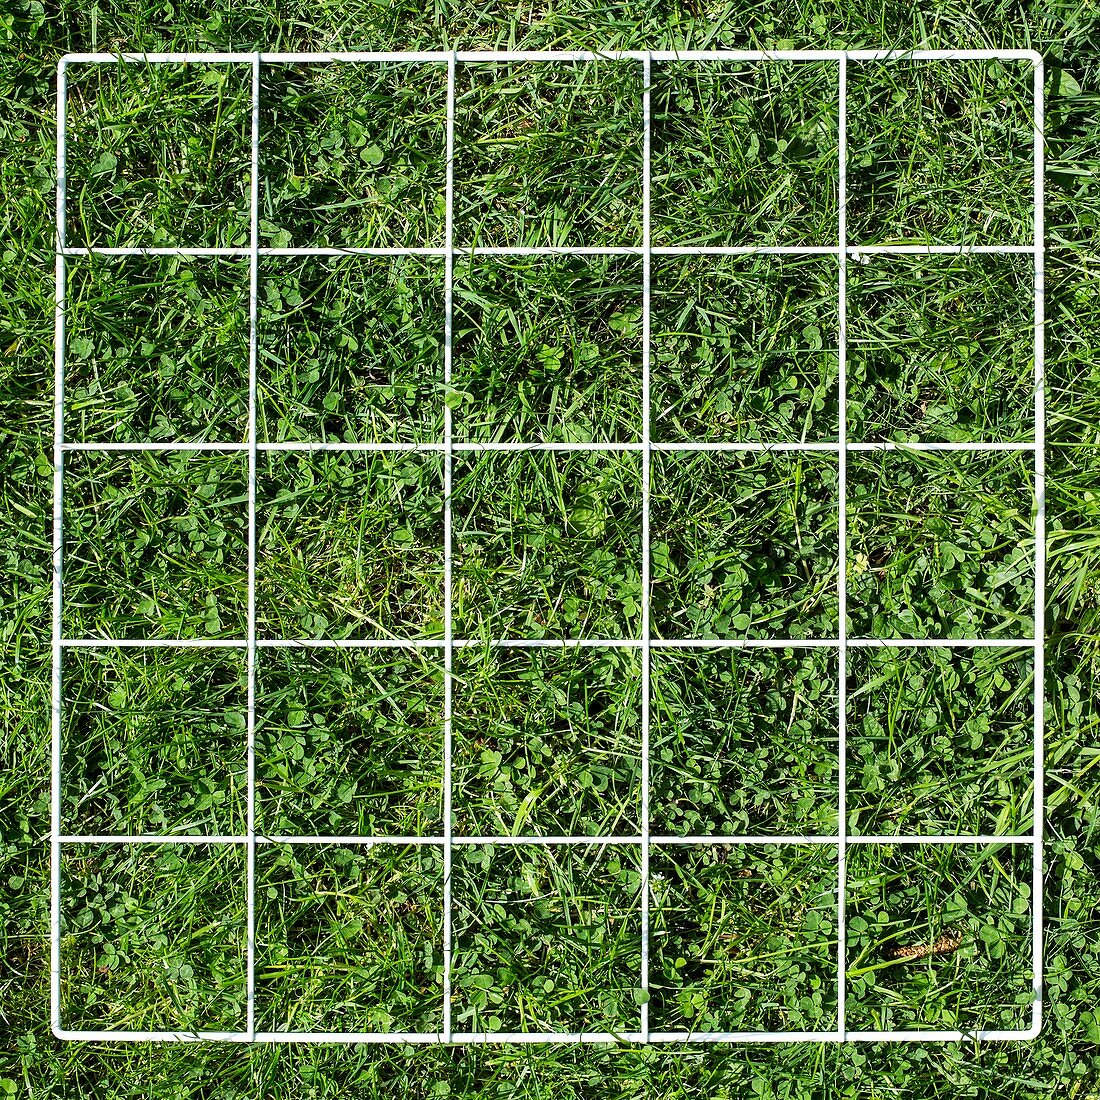 Quadrat on a lawn